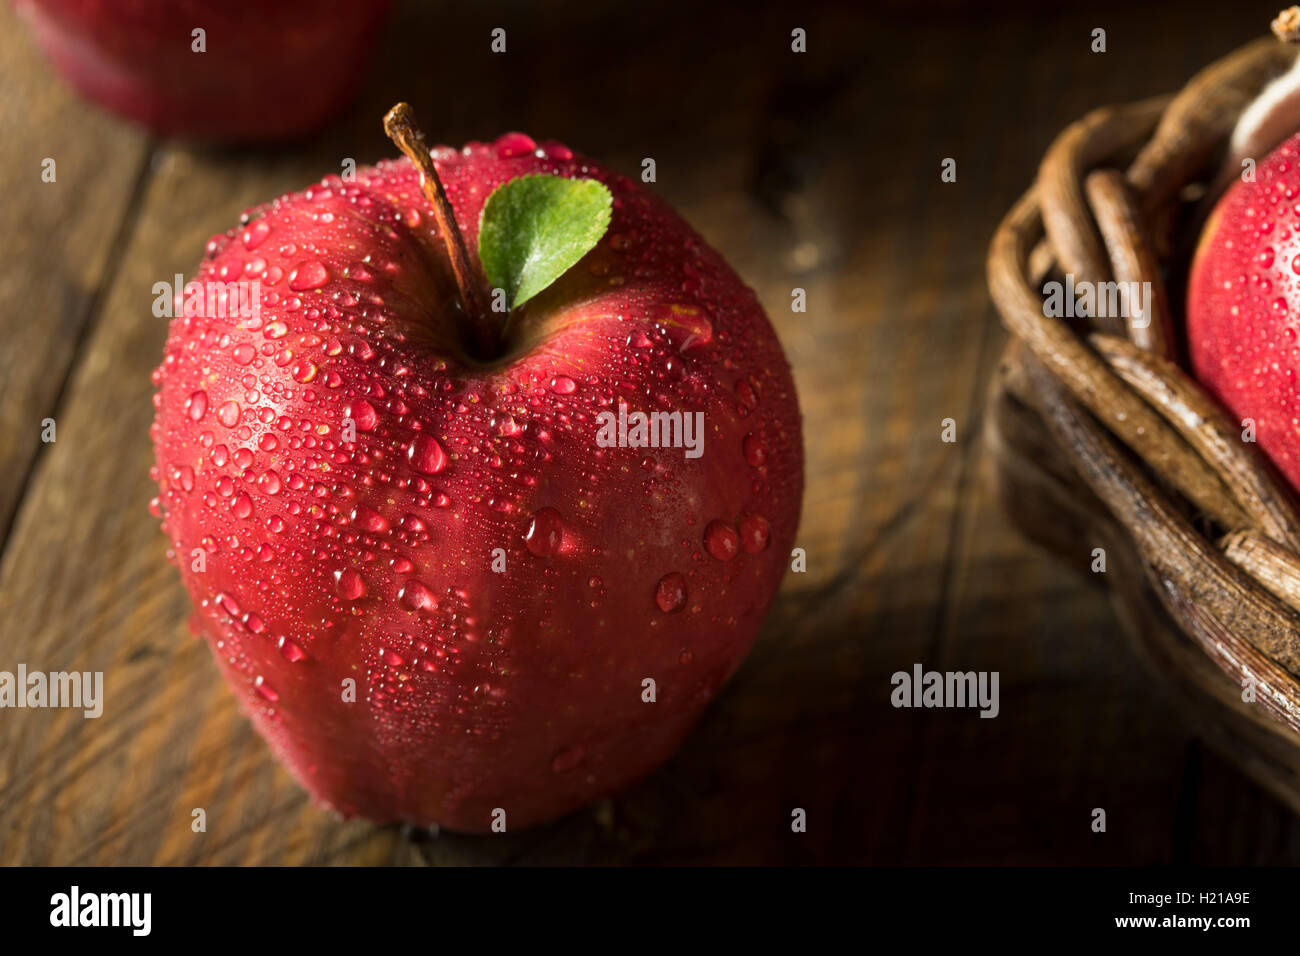 https://c8.alamy.com/comp/H21A9E/raw-organic-red-delicious-apples-ready-to-eat-H21A9E.jpg